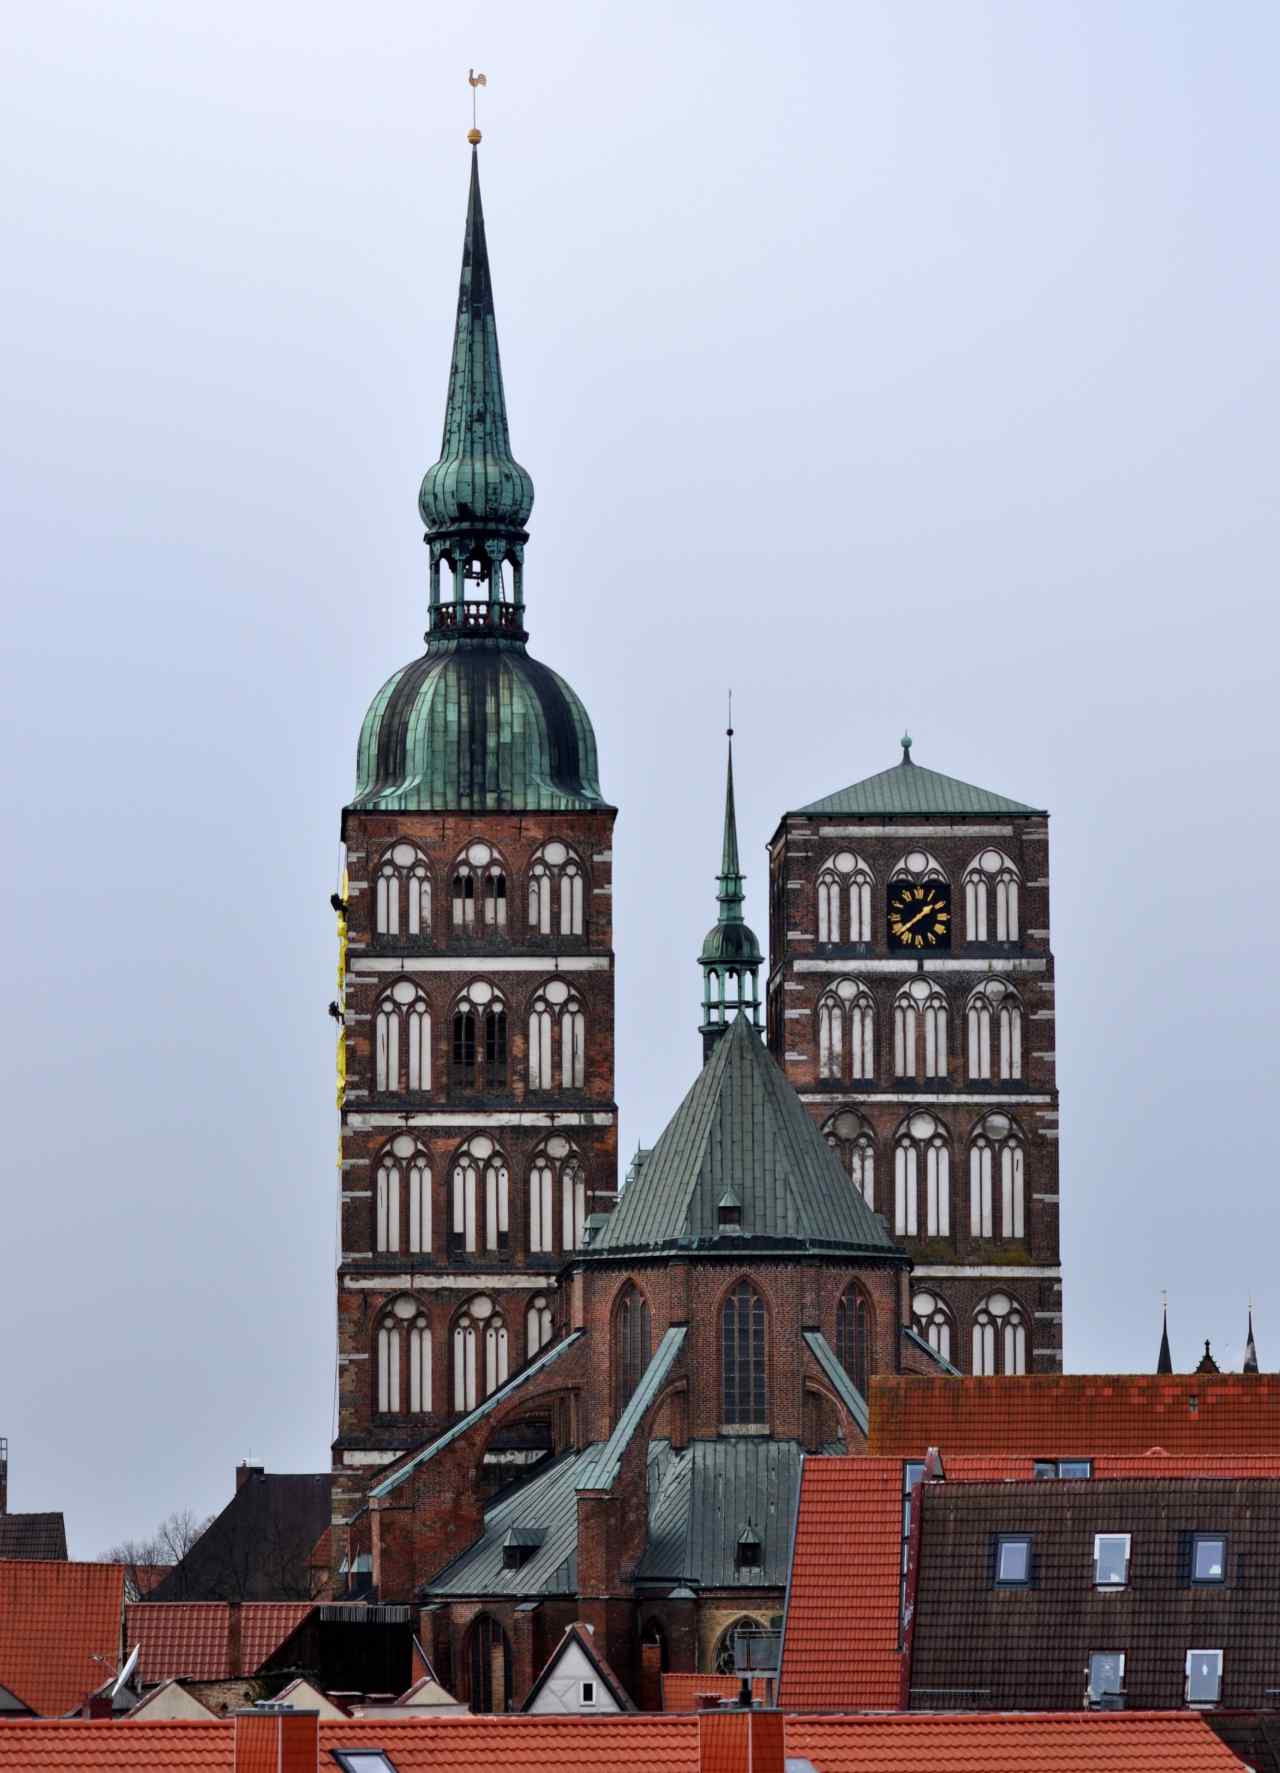 St. Nicholas’ Church, Stralsund, Germany